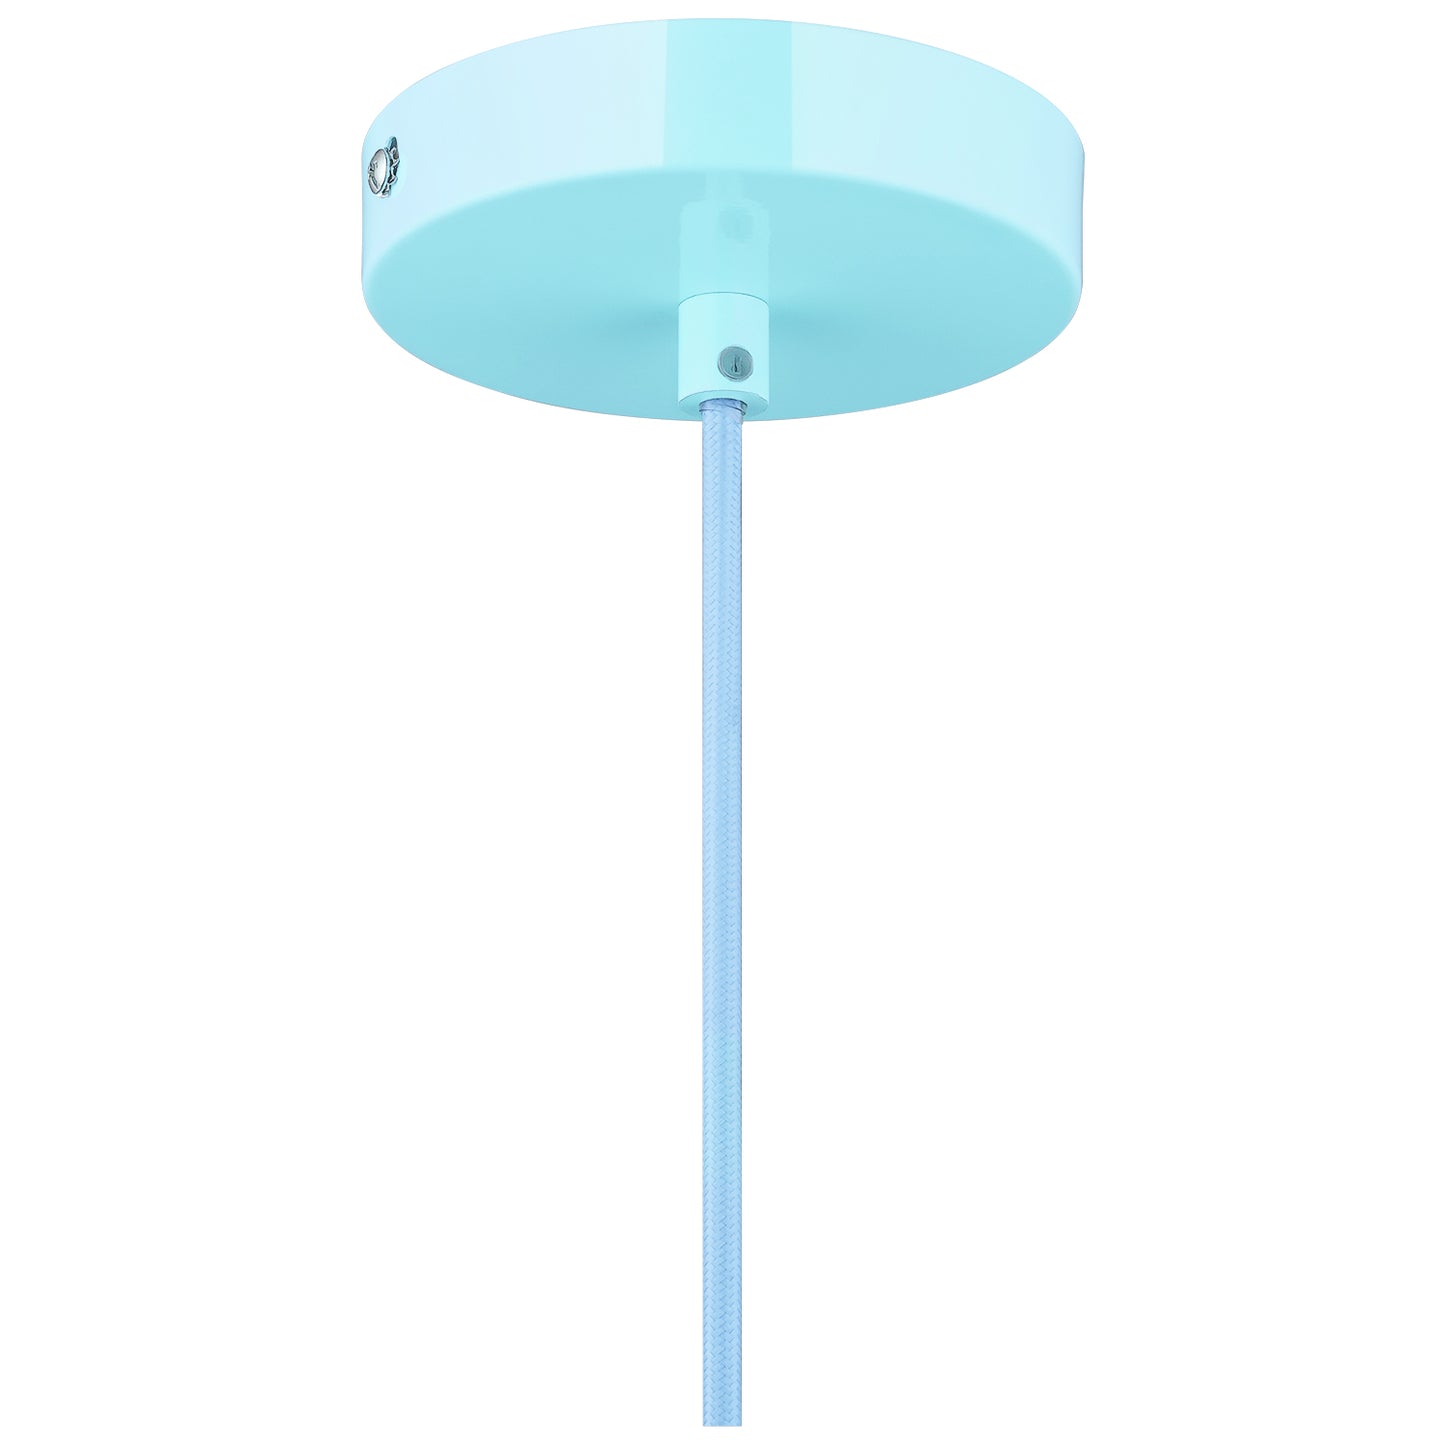 Sunlite - Zed 10″ Decorative Pendant Light Fixture, Baby Blue Finish with Decorative Chrome Grille